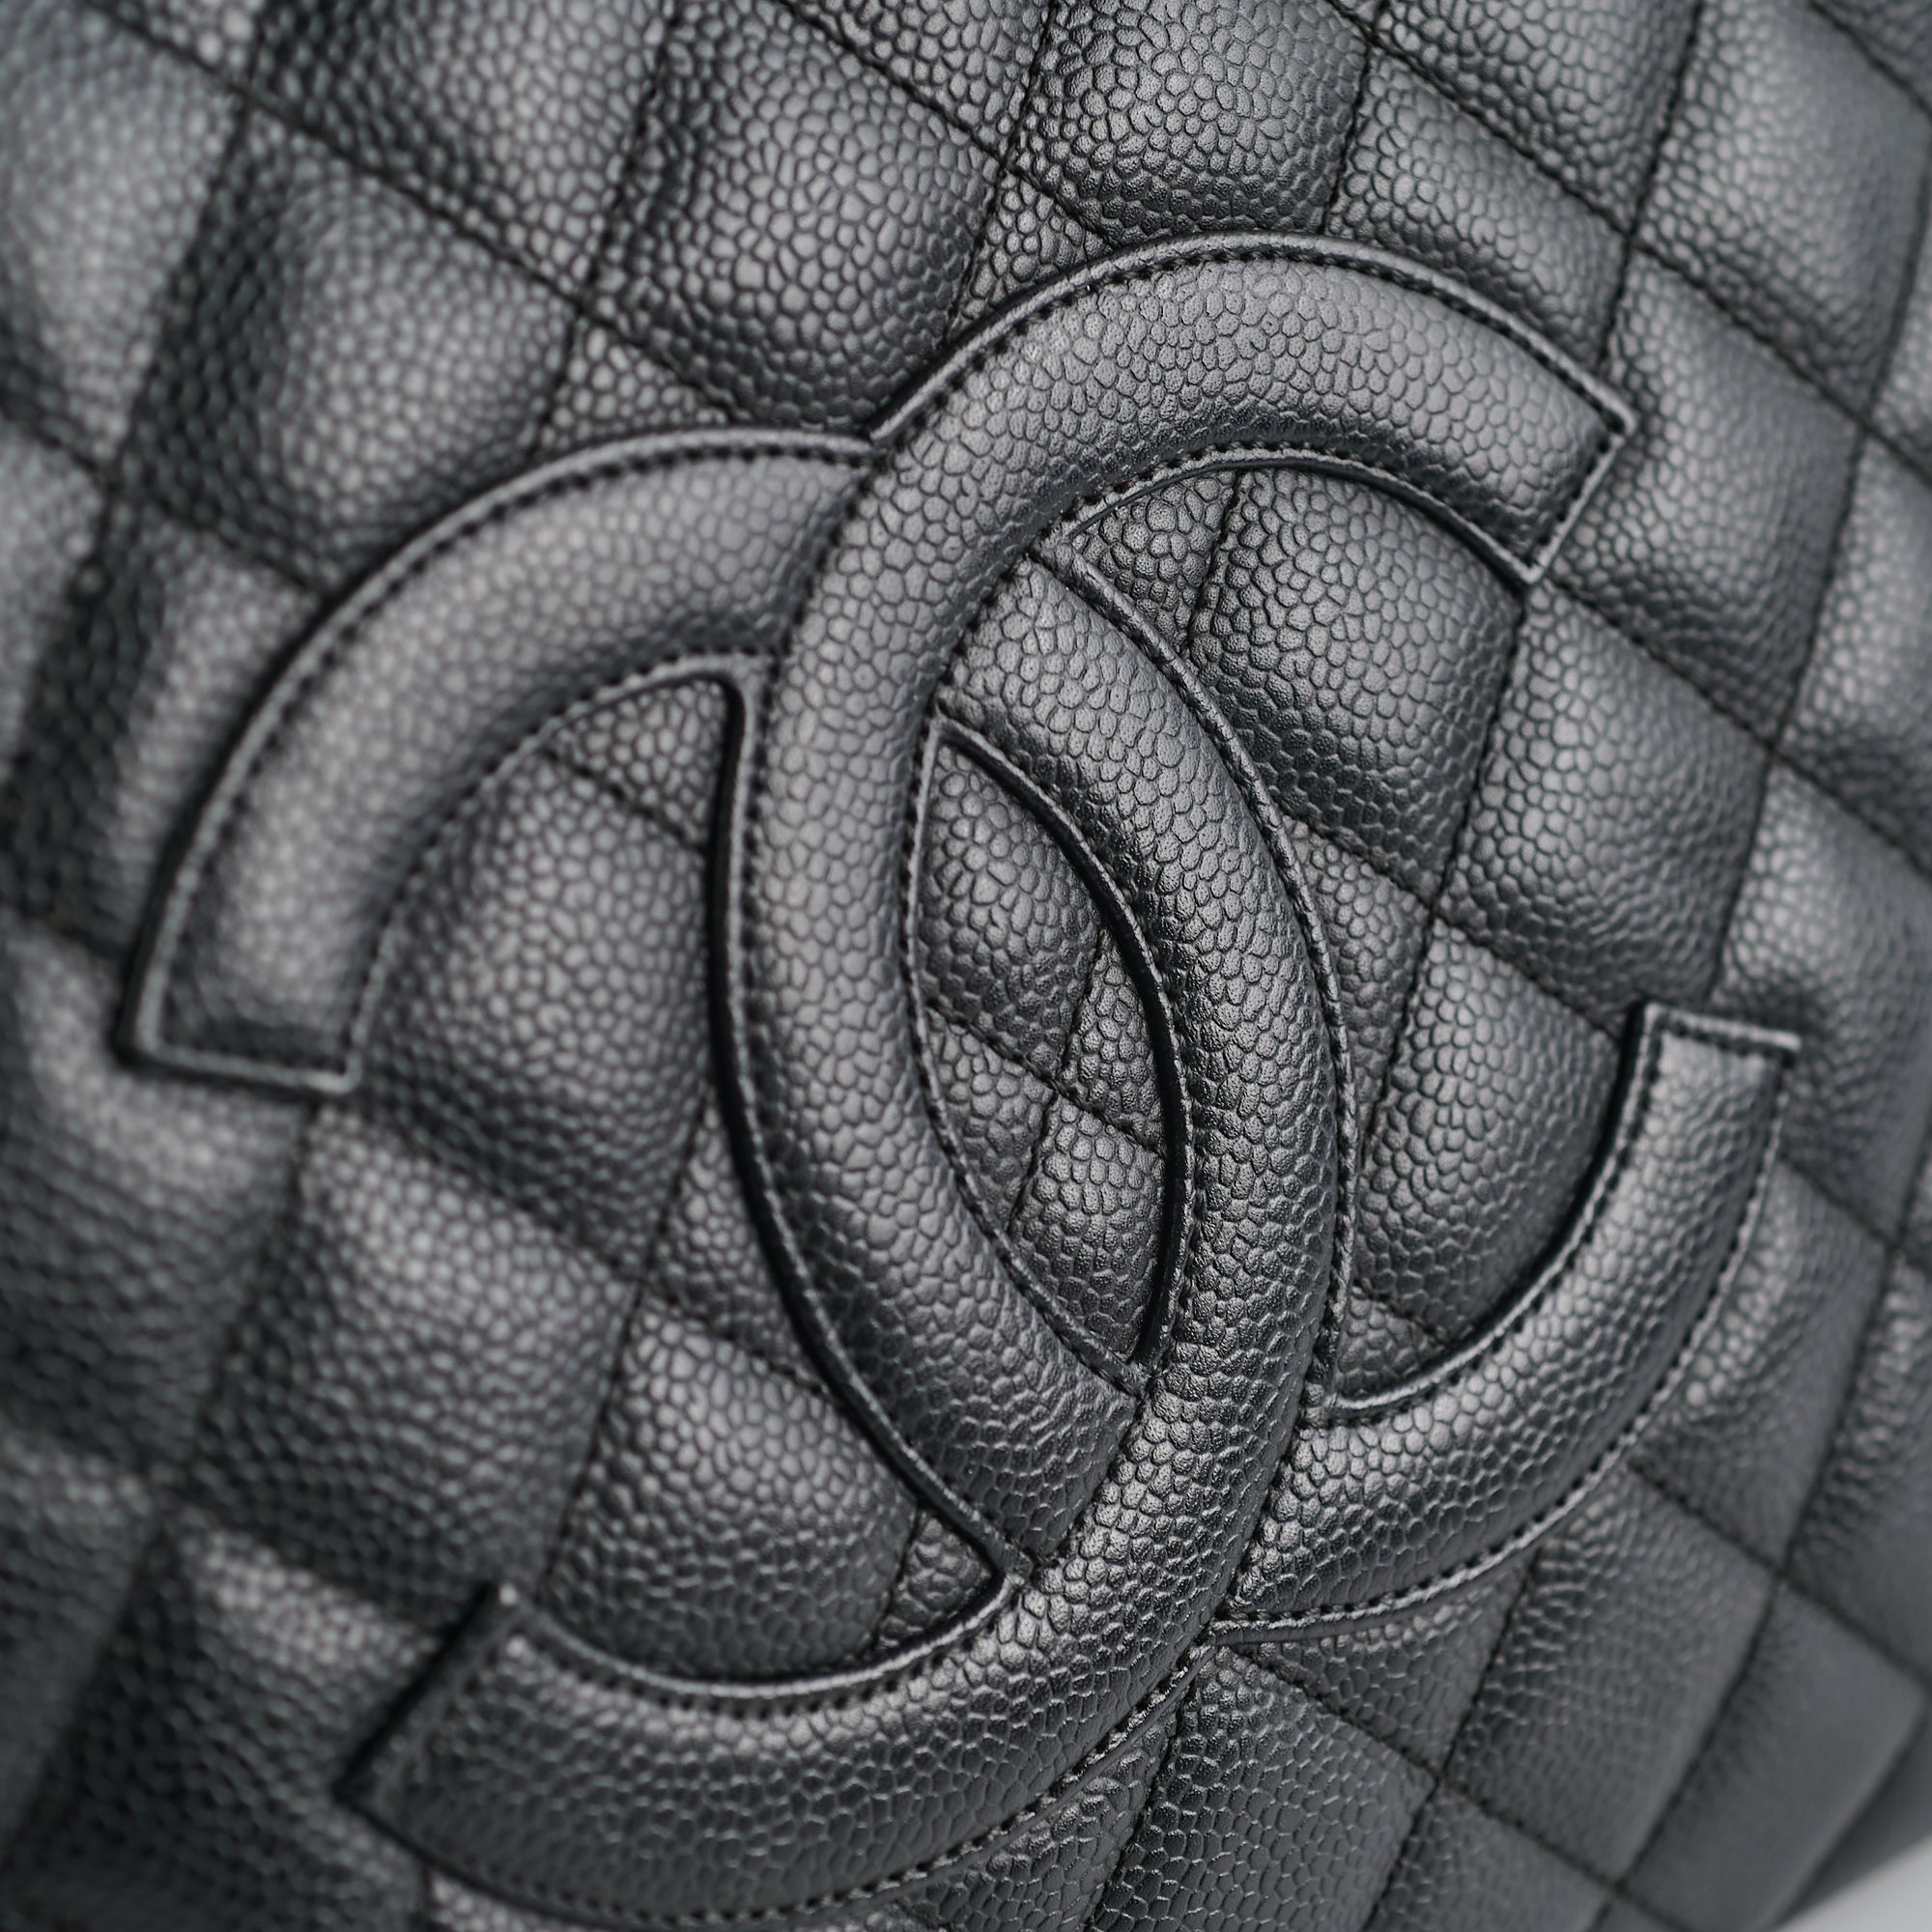 Chanel GST Black Caviar GHW - Designer WishBags